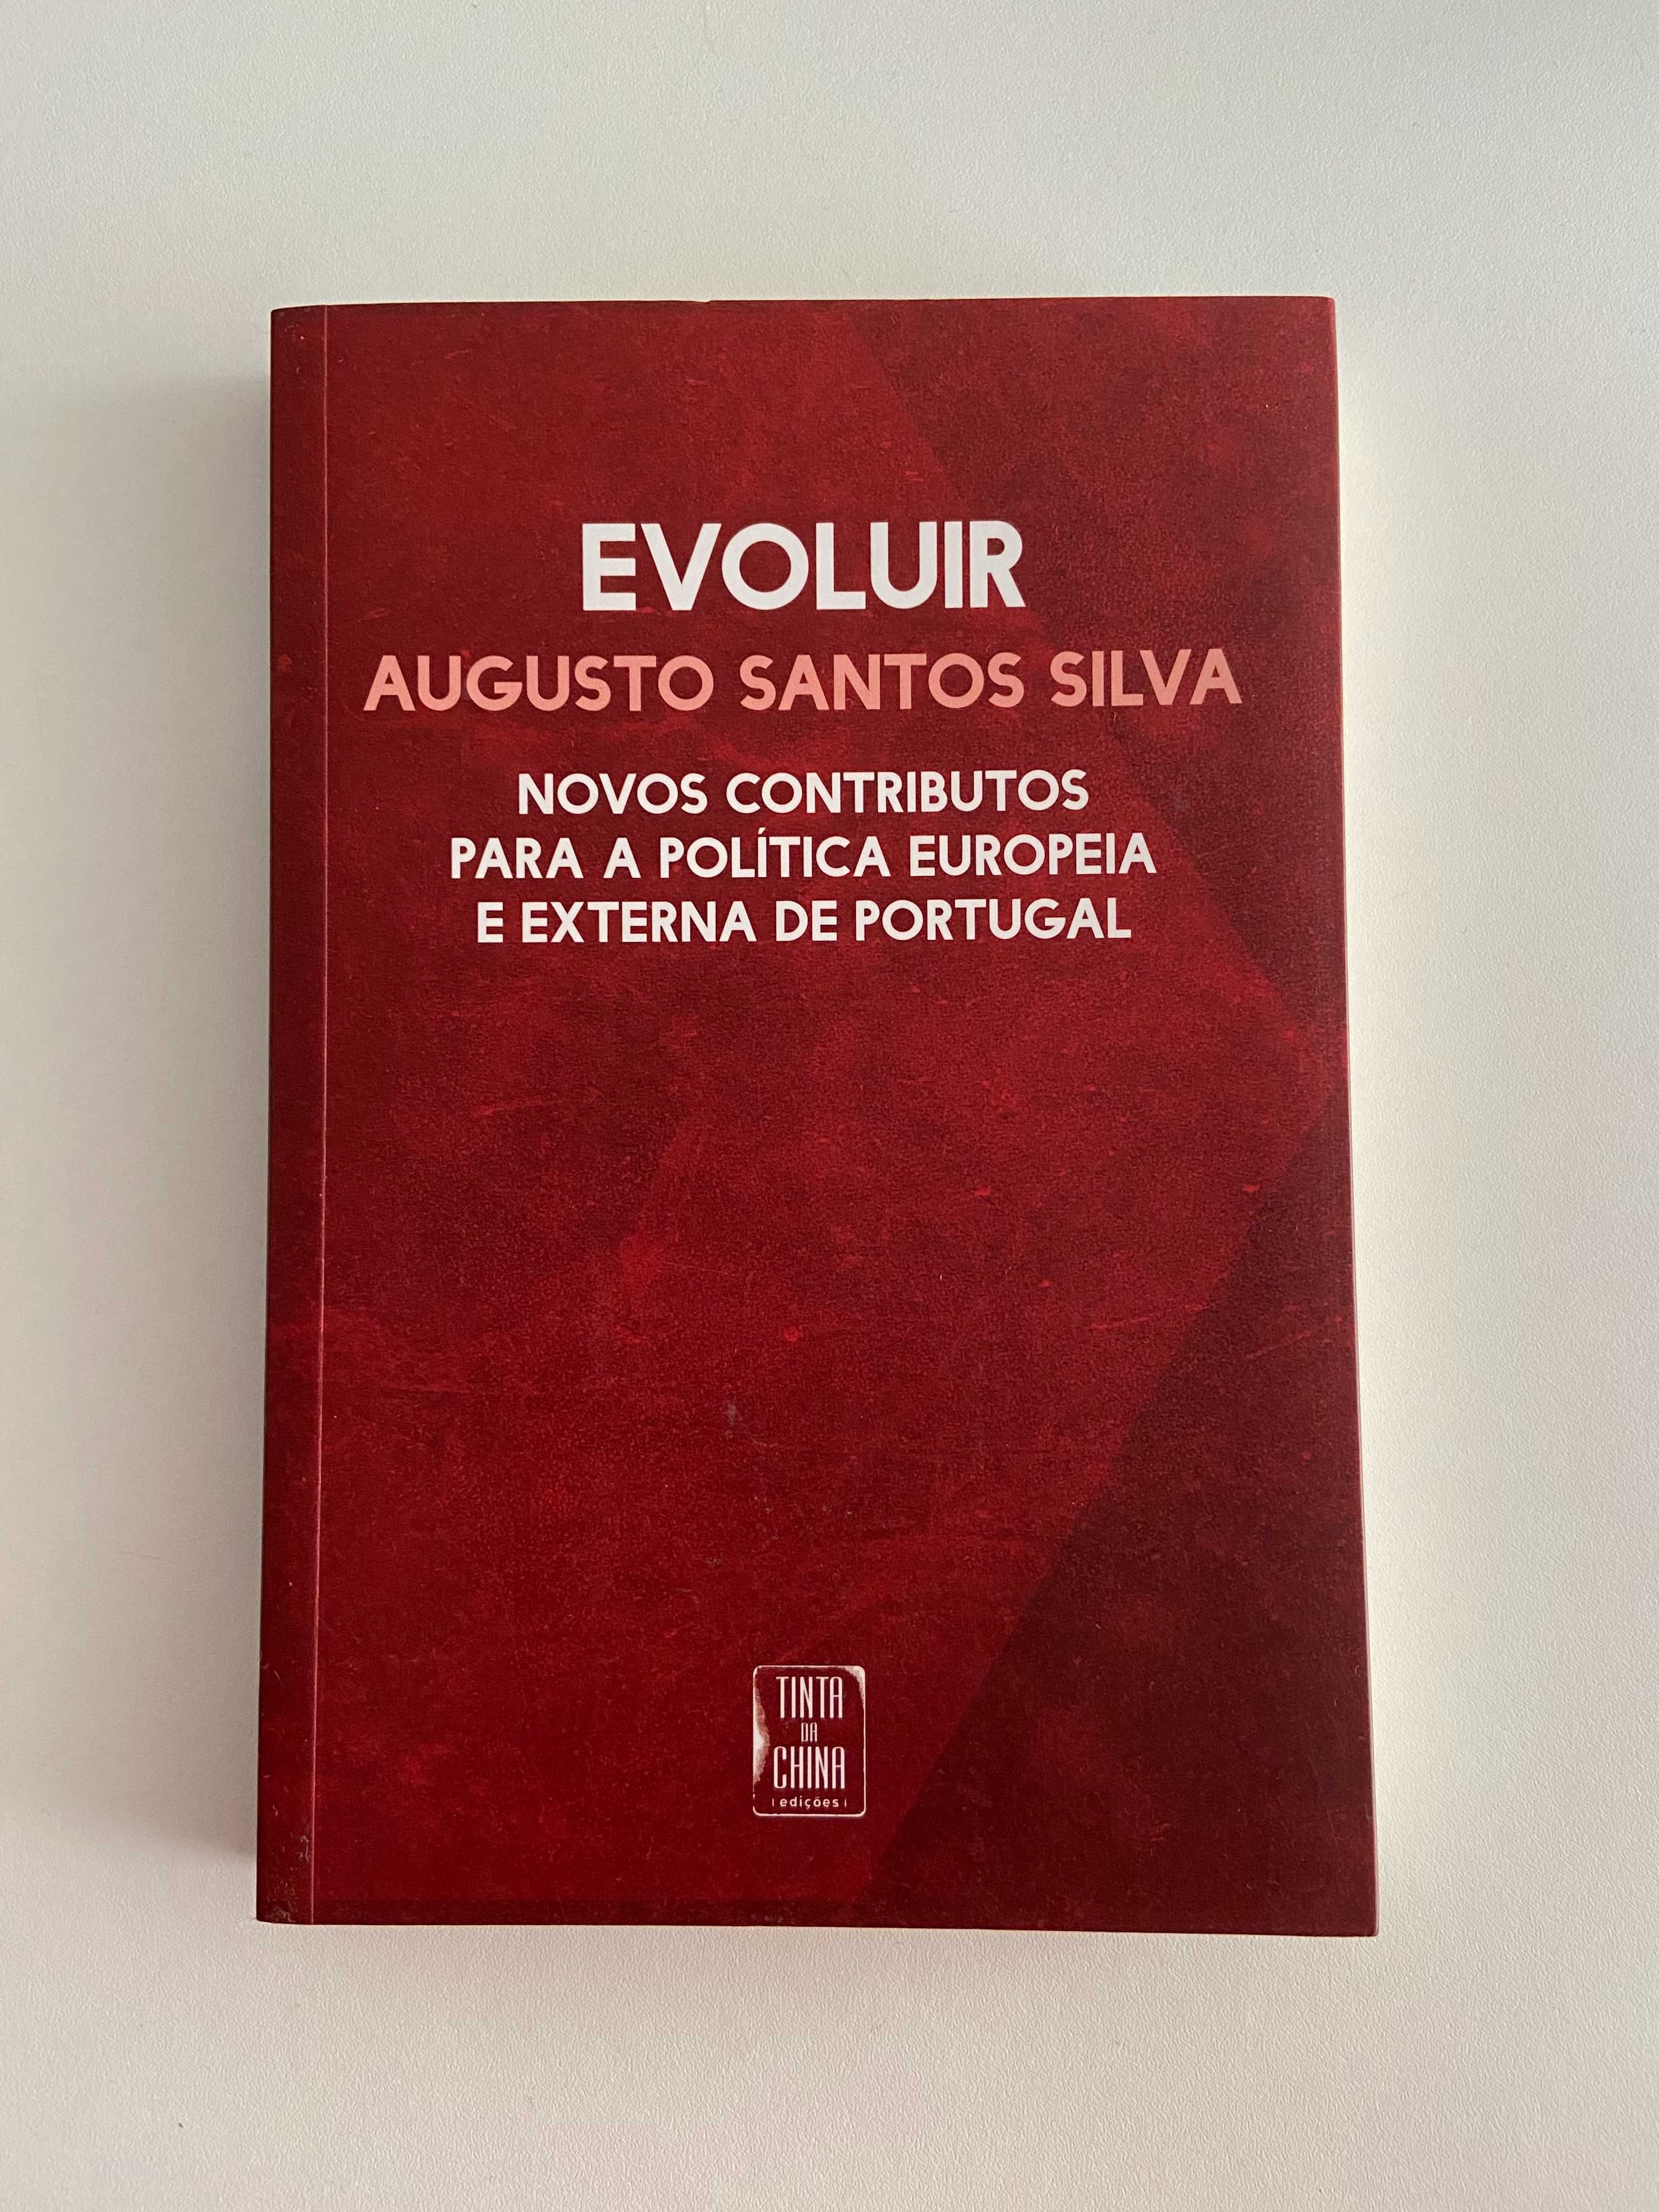 Evoluir (Augusto Santos Silva)